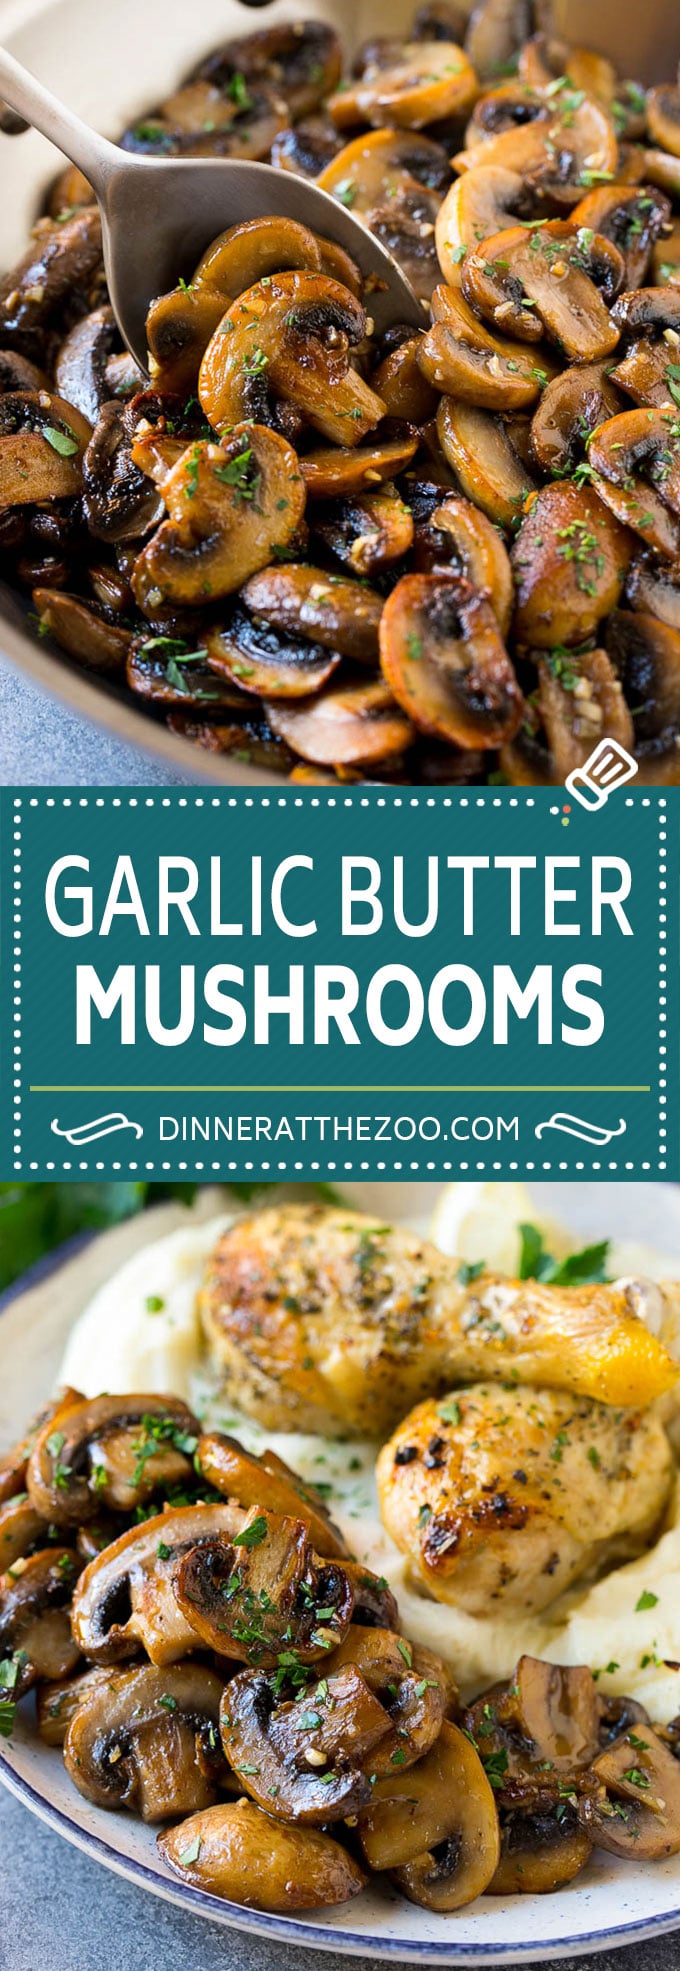 Sauteed Mushrooms Recipe | Garlic Butter Mushrooms | Steakhouse Mushrooms #mushrooms #garlic #butter #lowcarb #keto #sidedish #dinner #dinneratthezoo